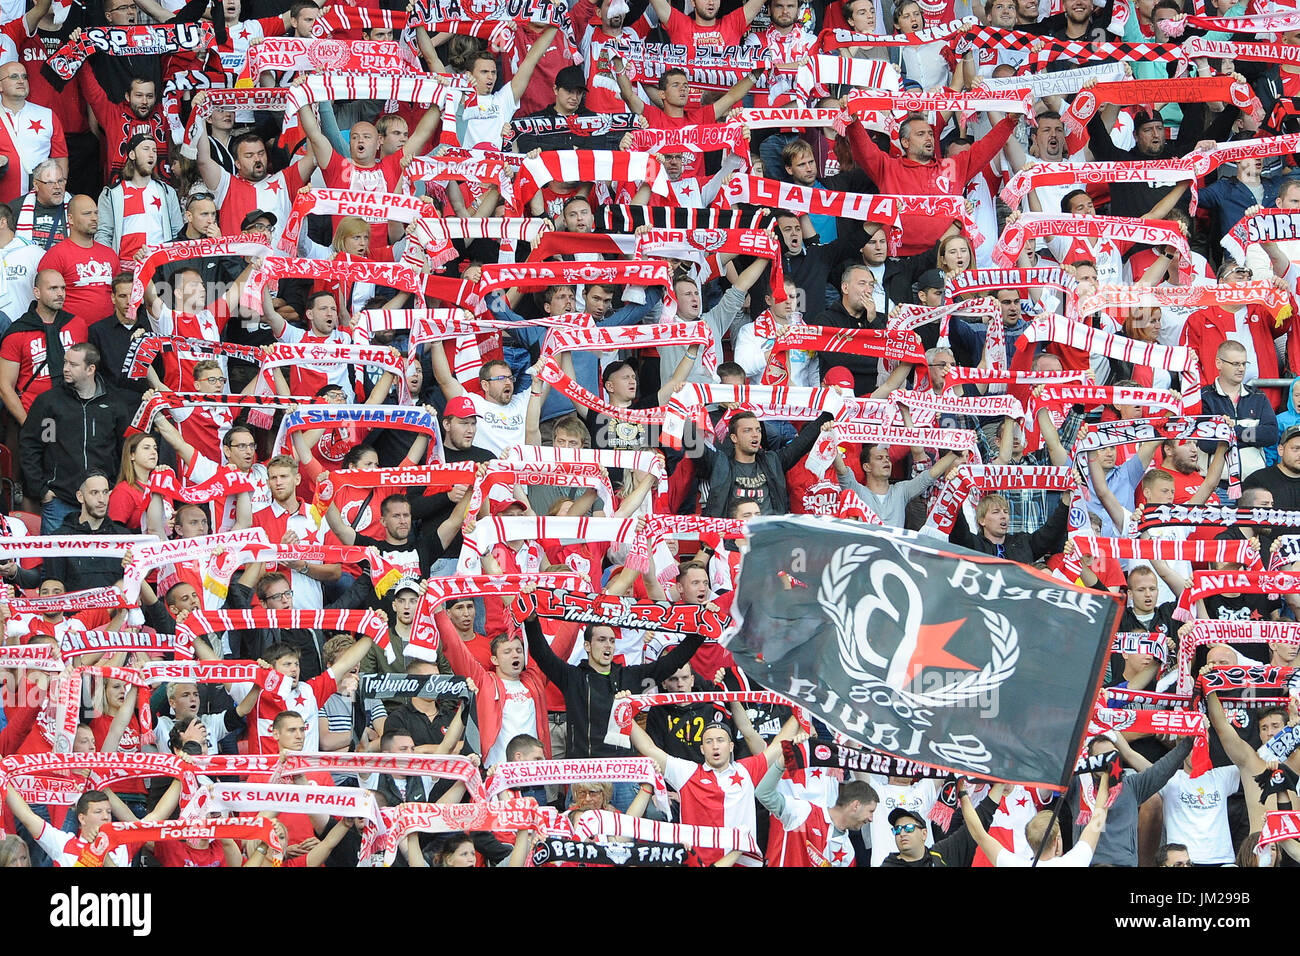 File:SK Slavia Praha Club Museum 02.jpg - Wikimedia Commons